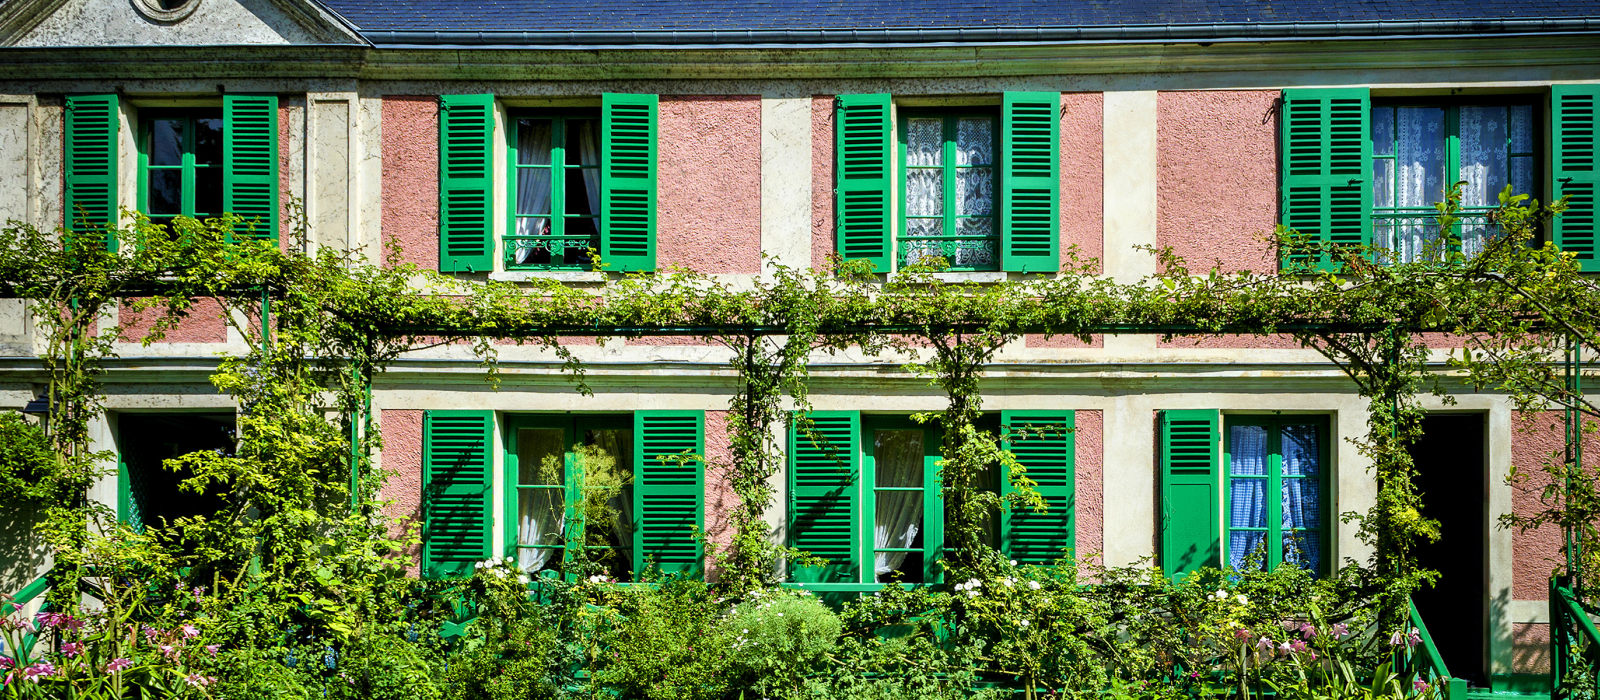 Fondation Claude Monet - Giverny